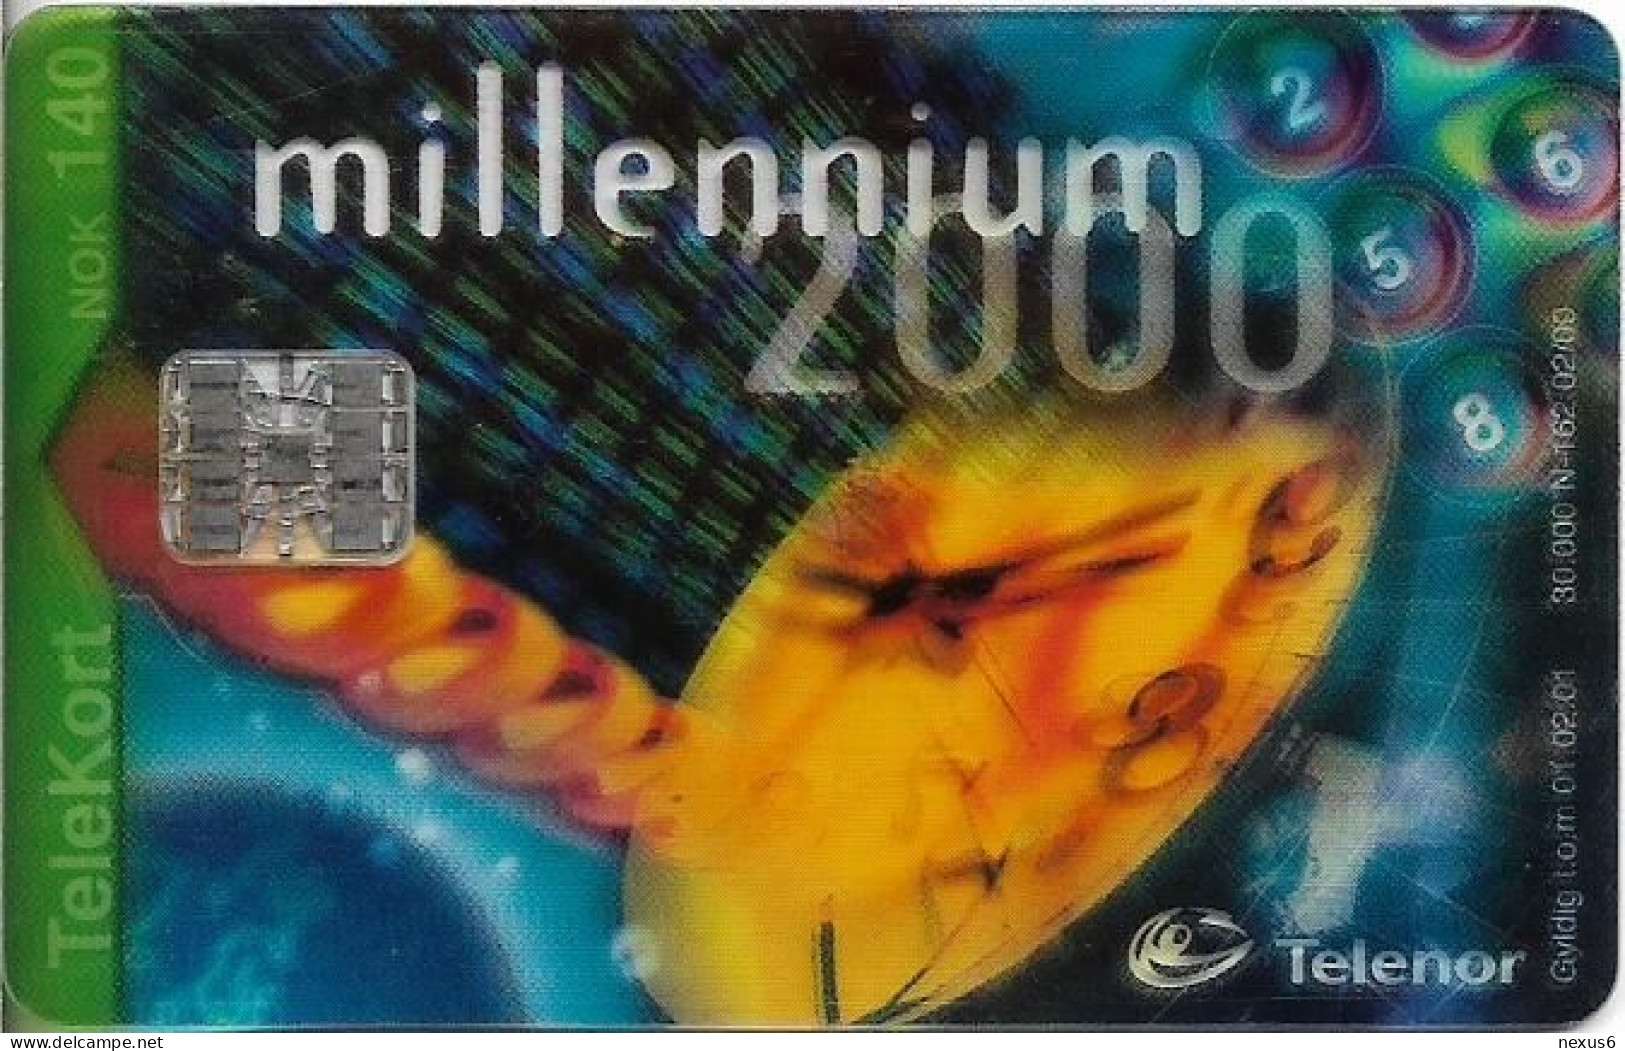 Norway - Telenor - Millennium 2000 (Transparent Card) - N-162 - 02.2000, 140U, 30.000ex, Used - Norway